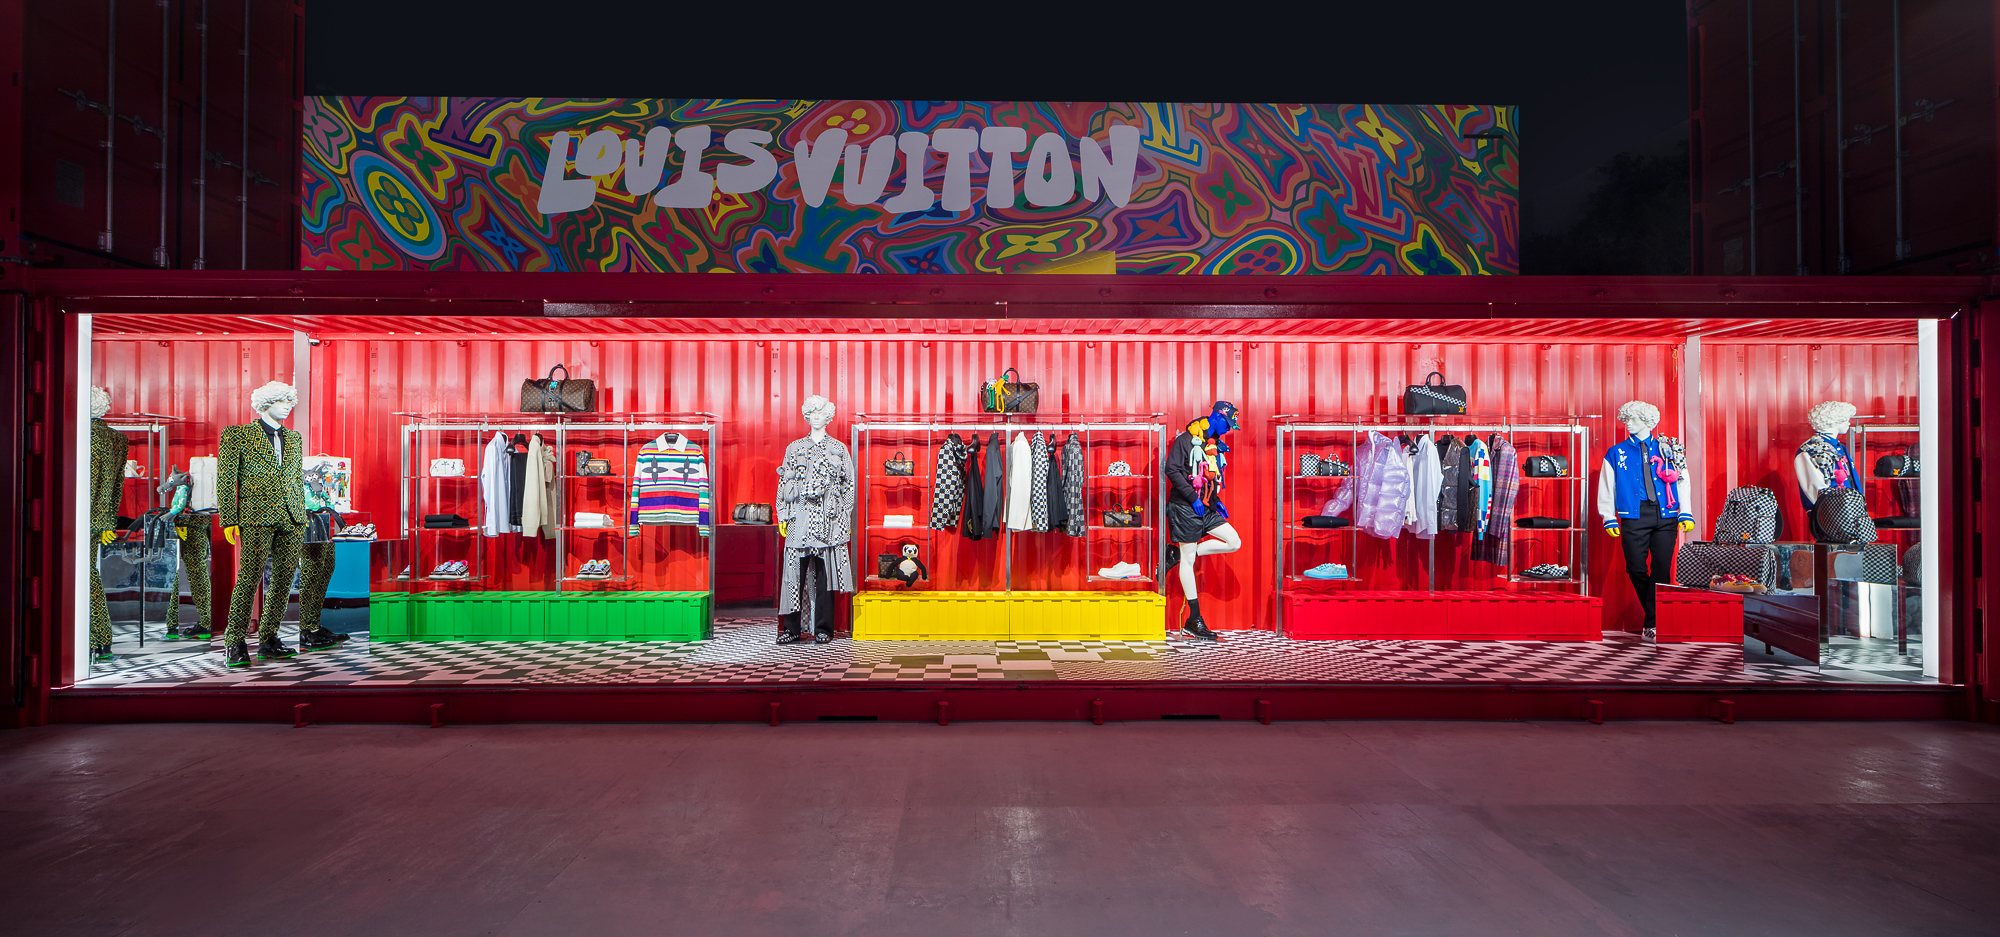 Louis Vuitton brings fashionable whimsy to Miami Design District -  Lifestyle Media